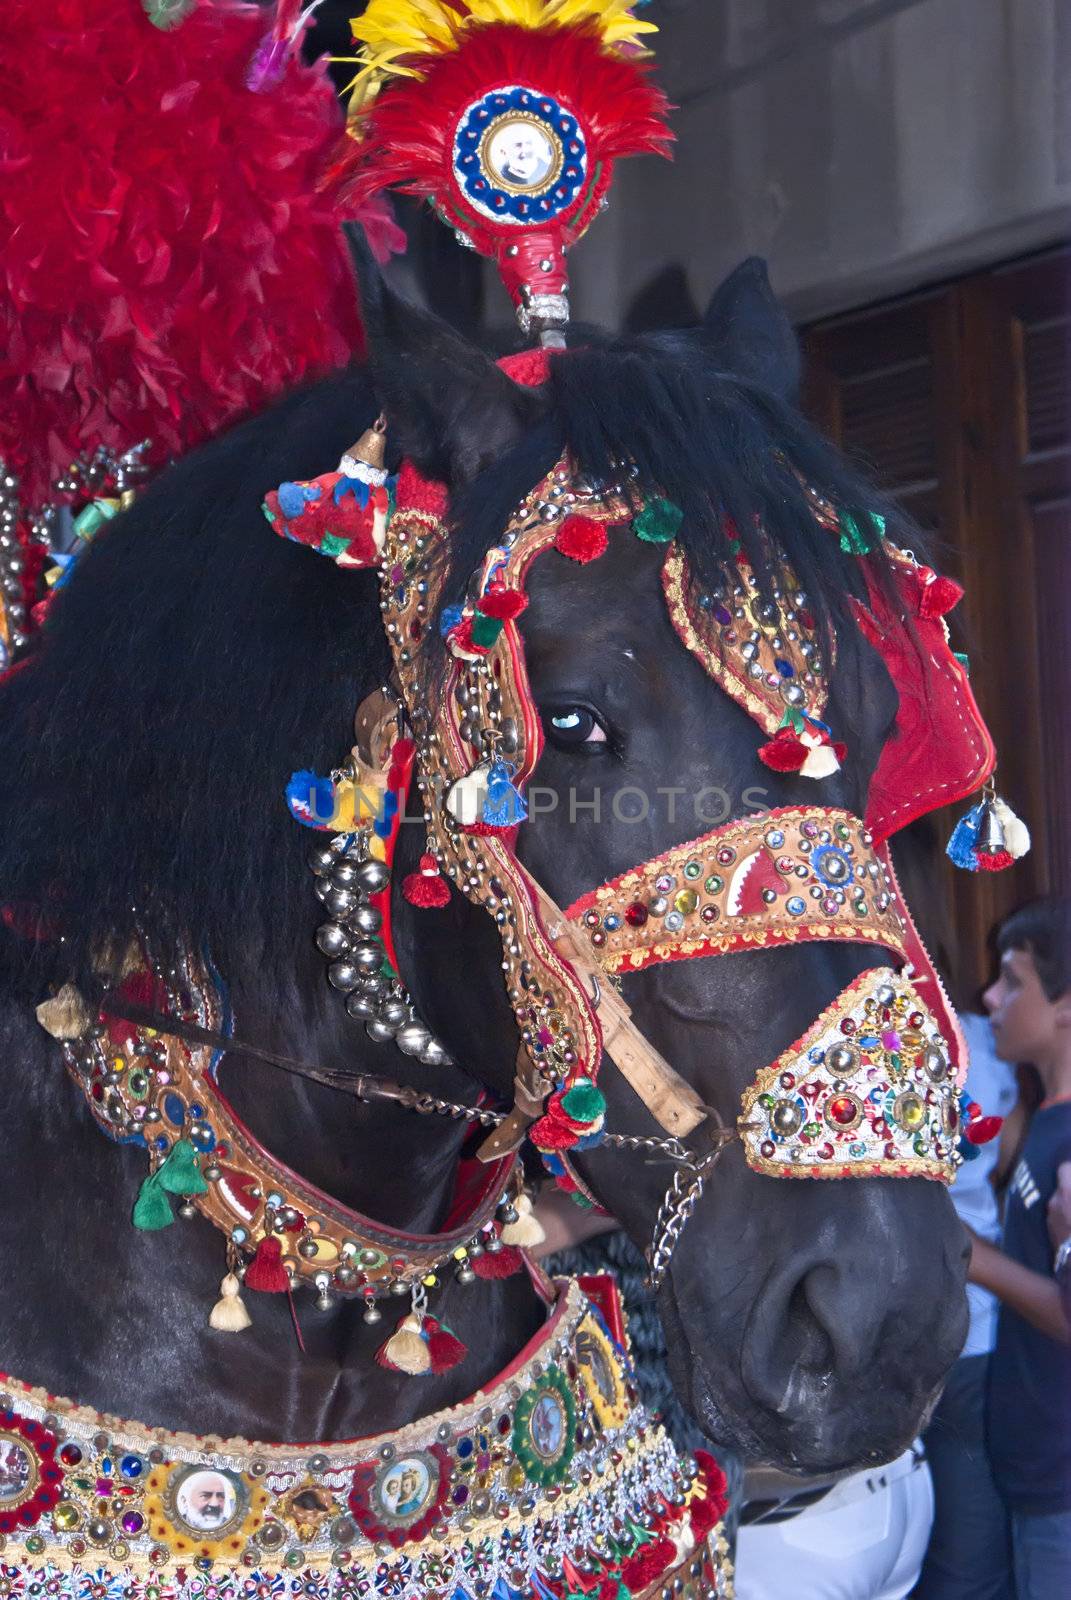  Folkloristic parade of traditional horse-cars in Sicily  by gandolfocannatella